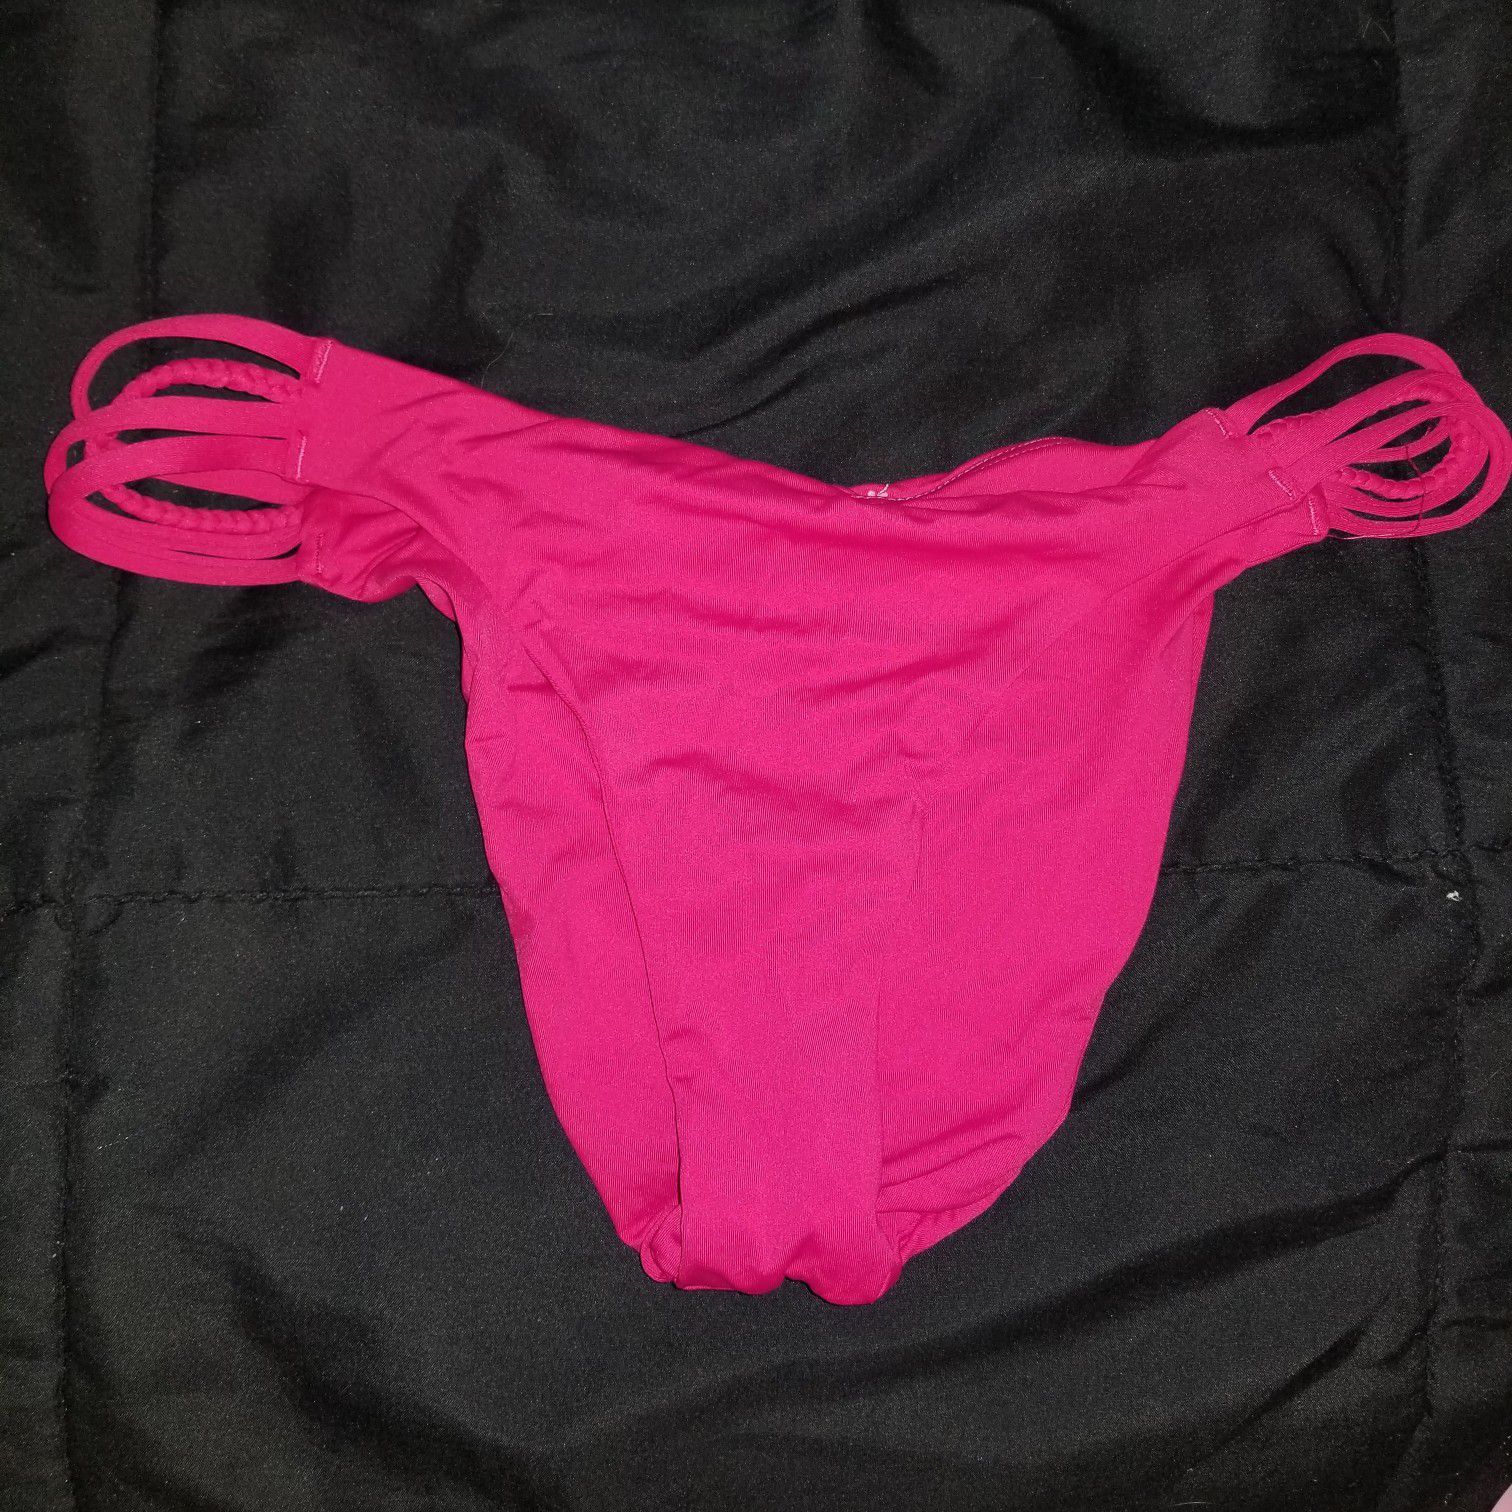 Hot Pink "Roxy" Strappy Bikini Bottoms (New with Tag)